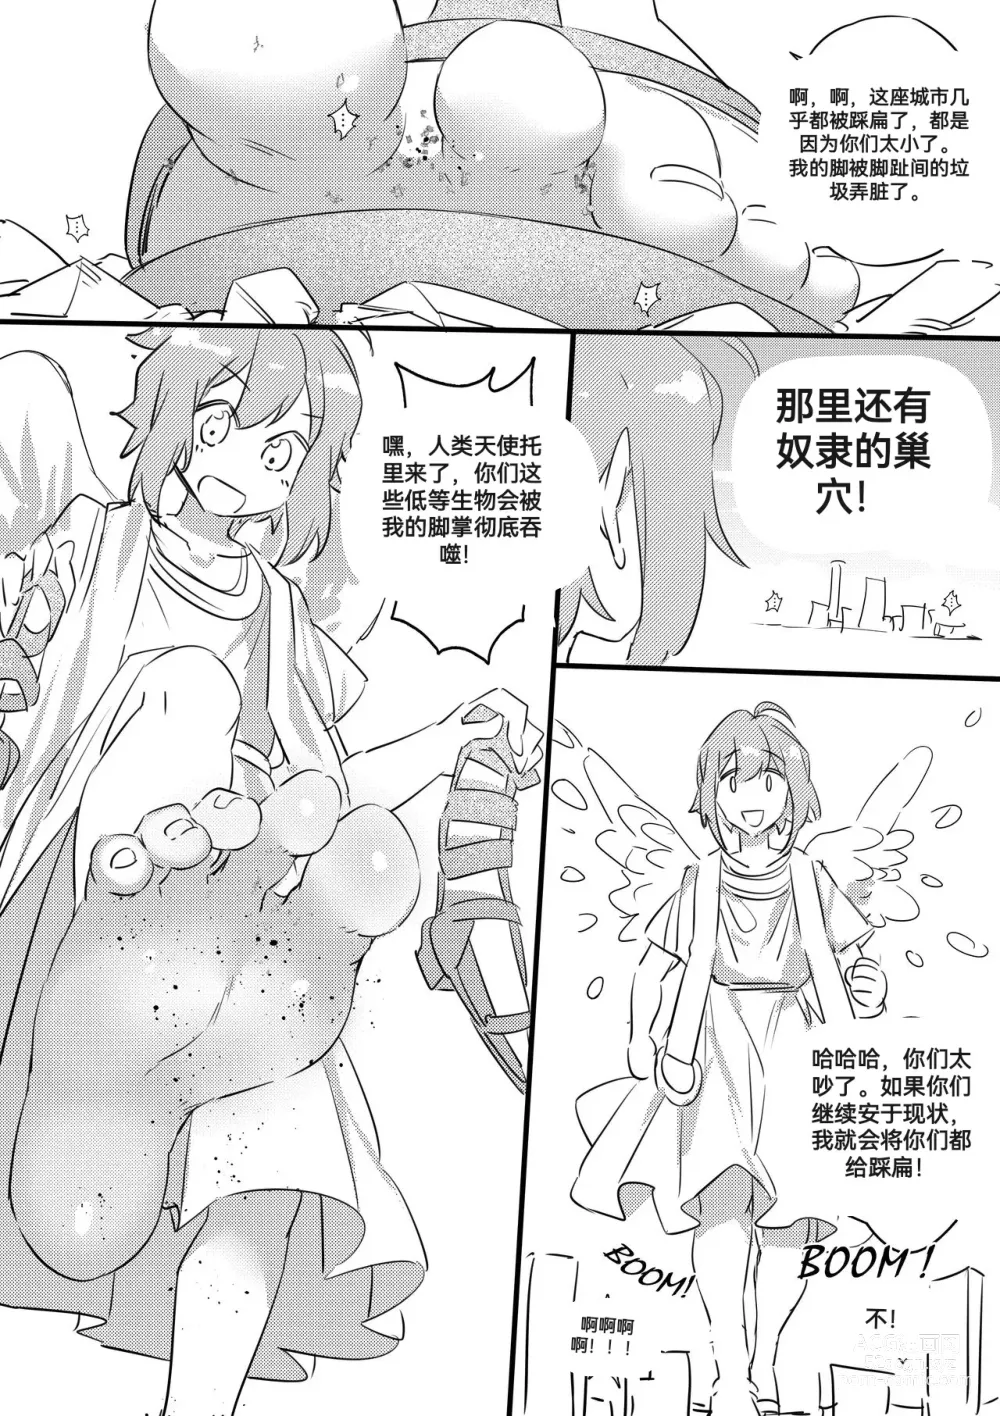 Page 9 of manga 自我翻译（五）gw论坛转载，落叶秋风